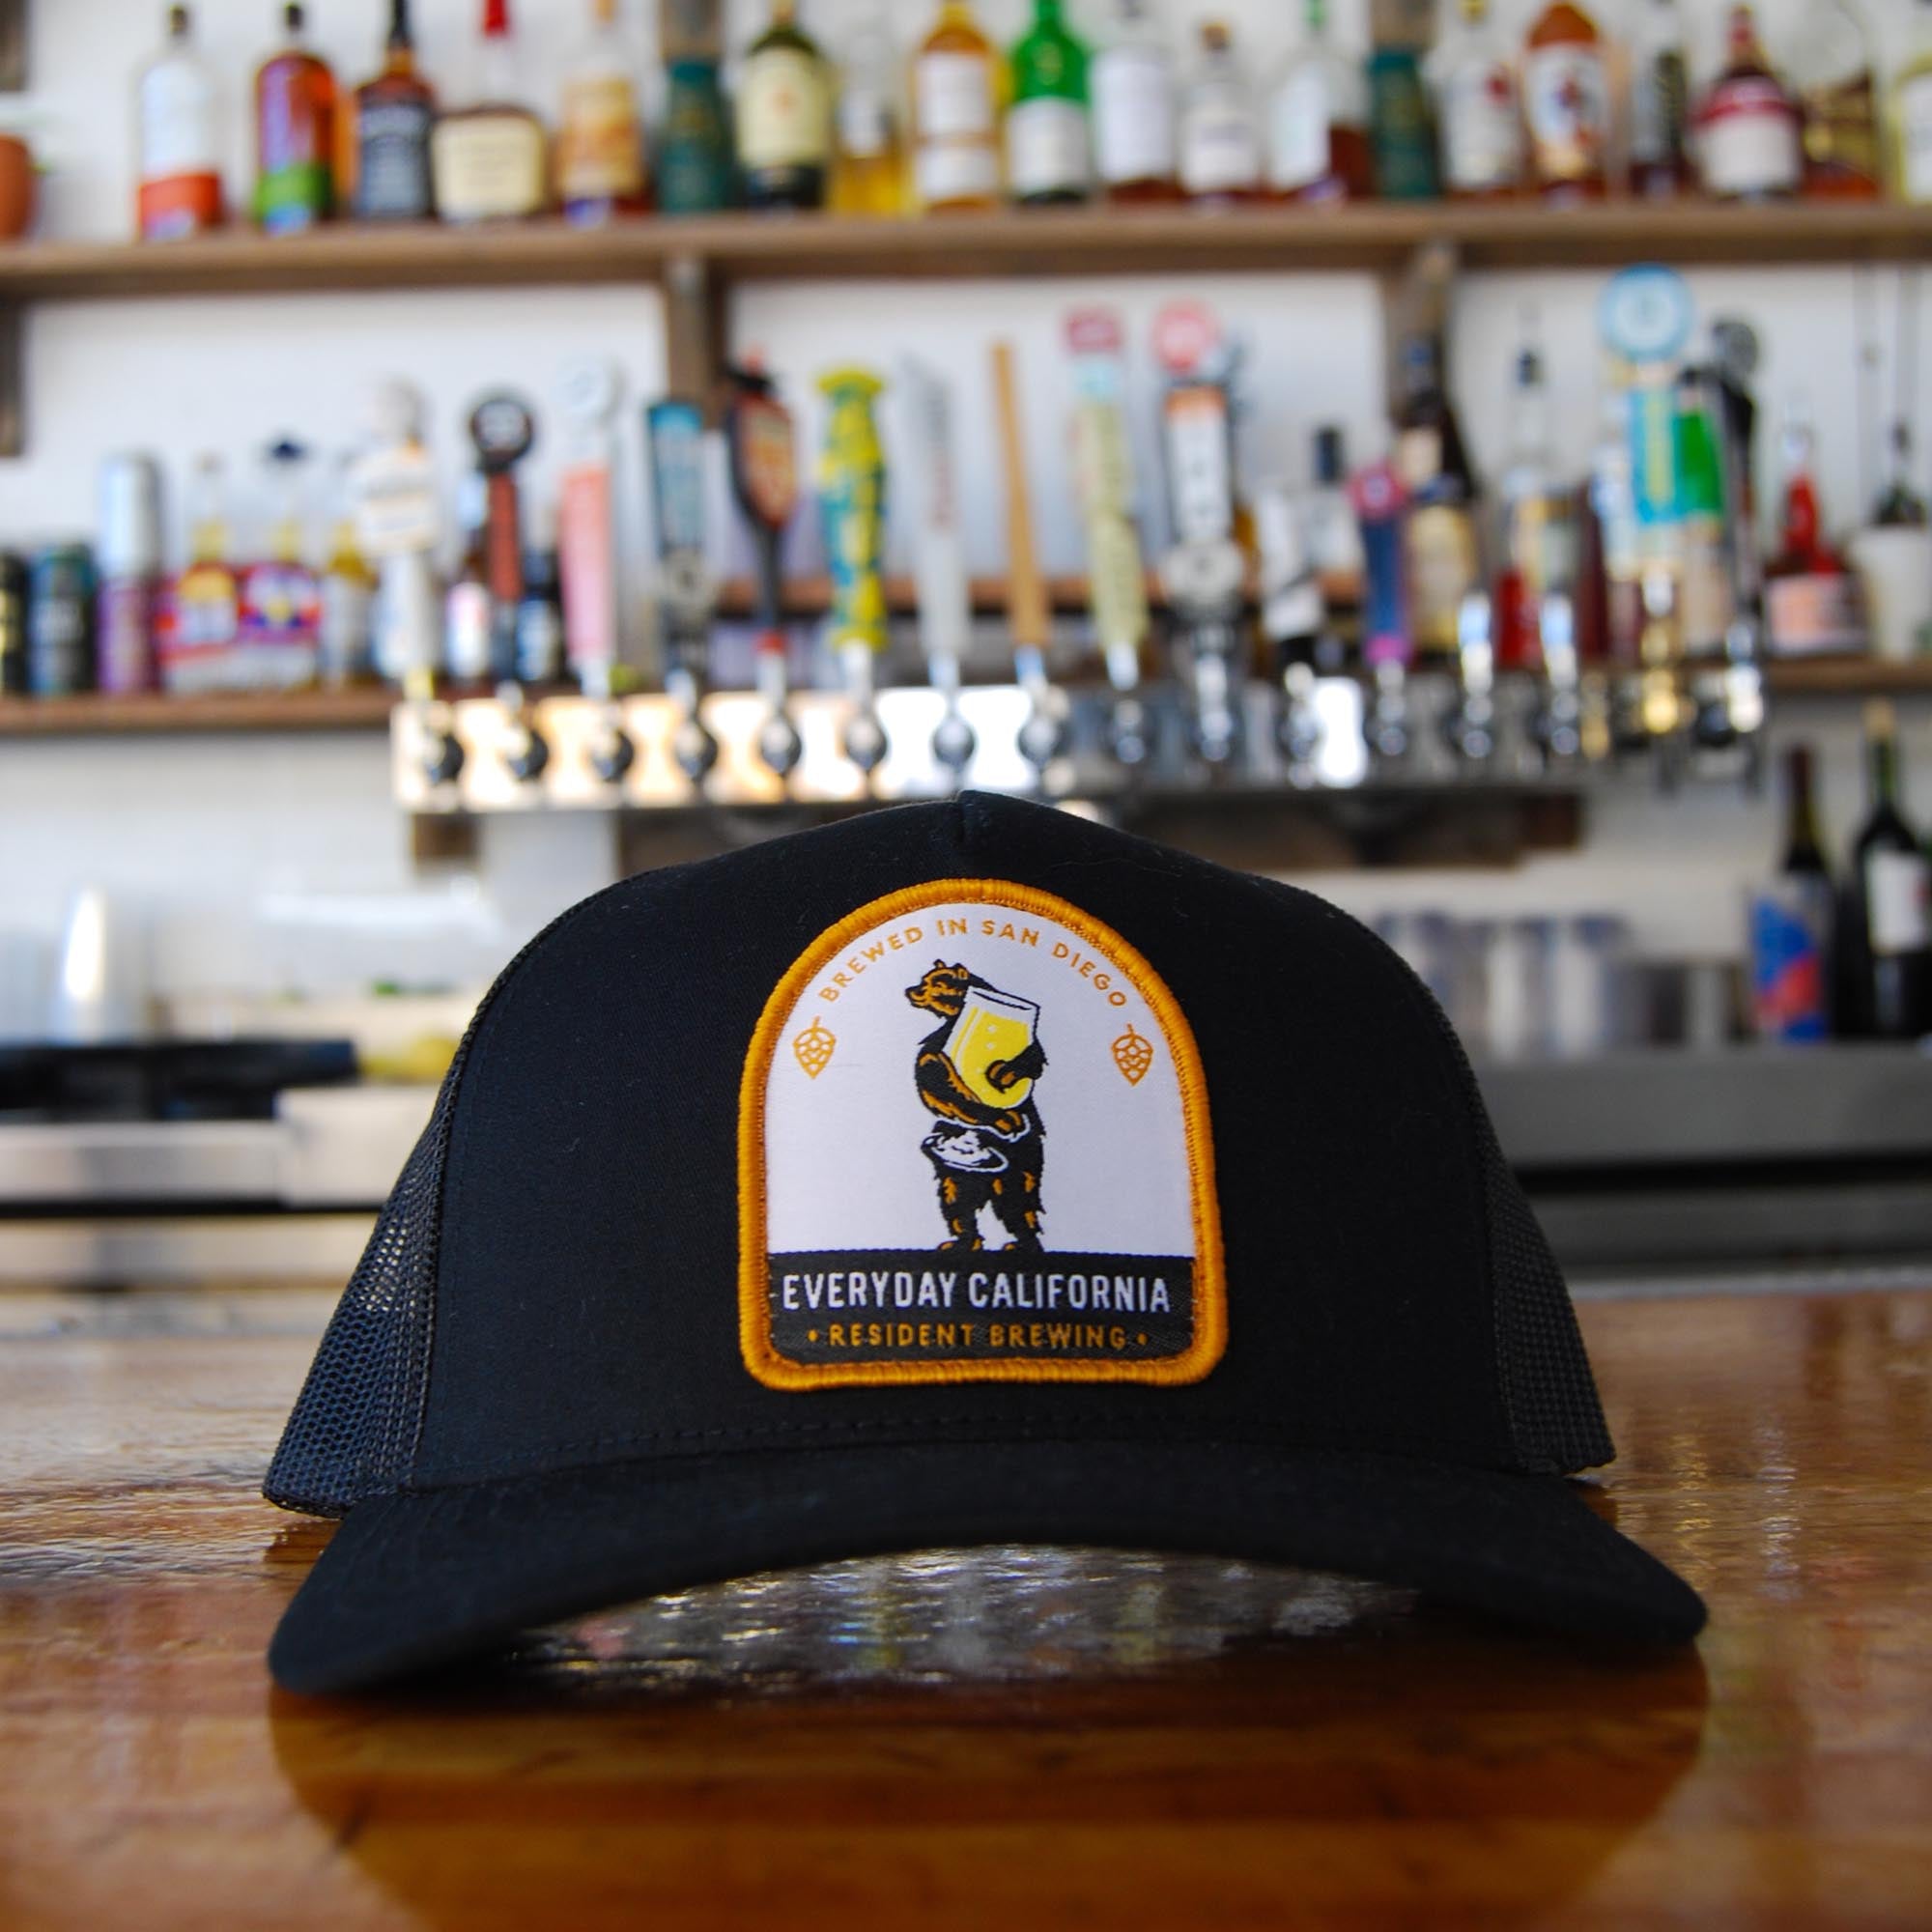 Everyday California Brewski Trucker Hat in Black on bar